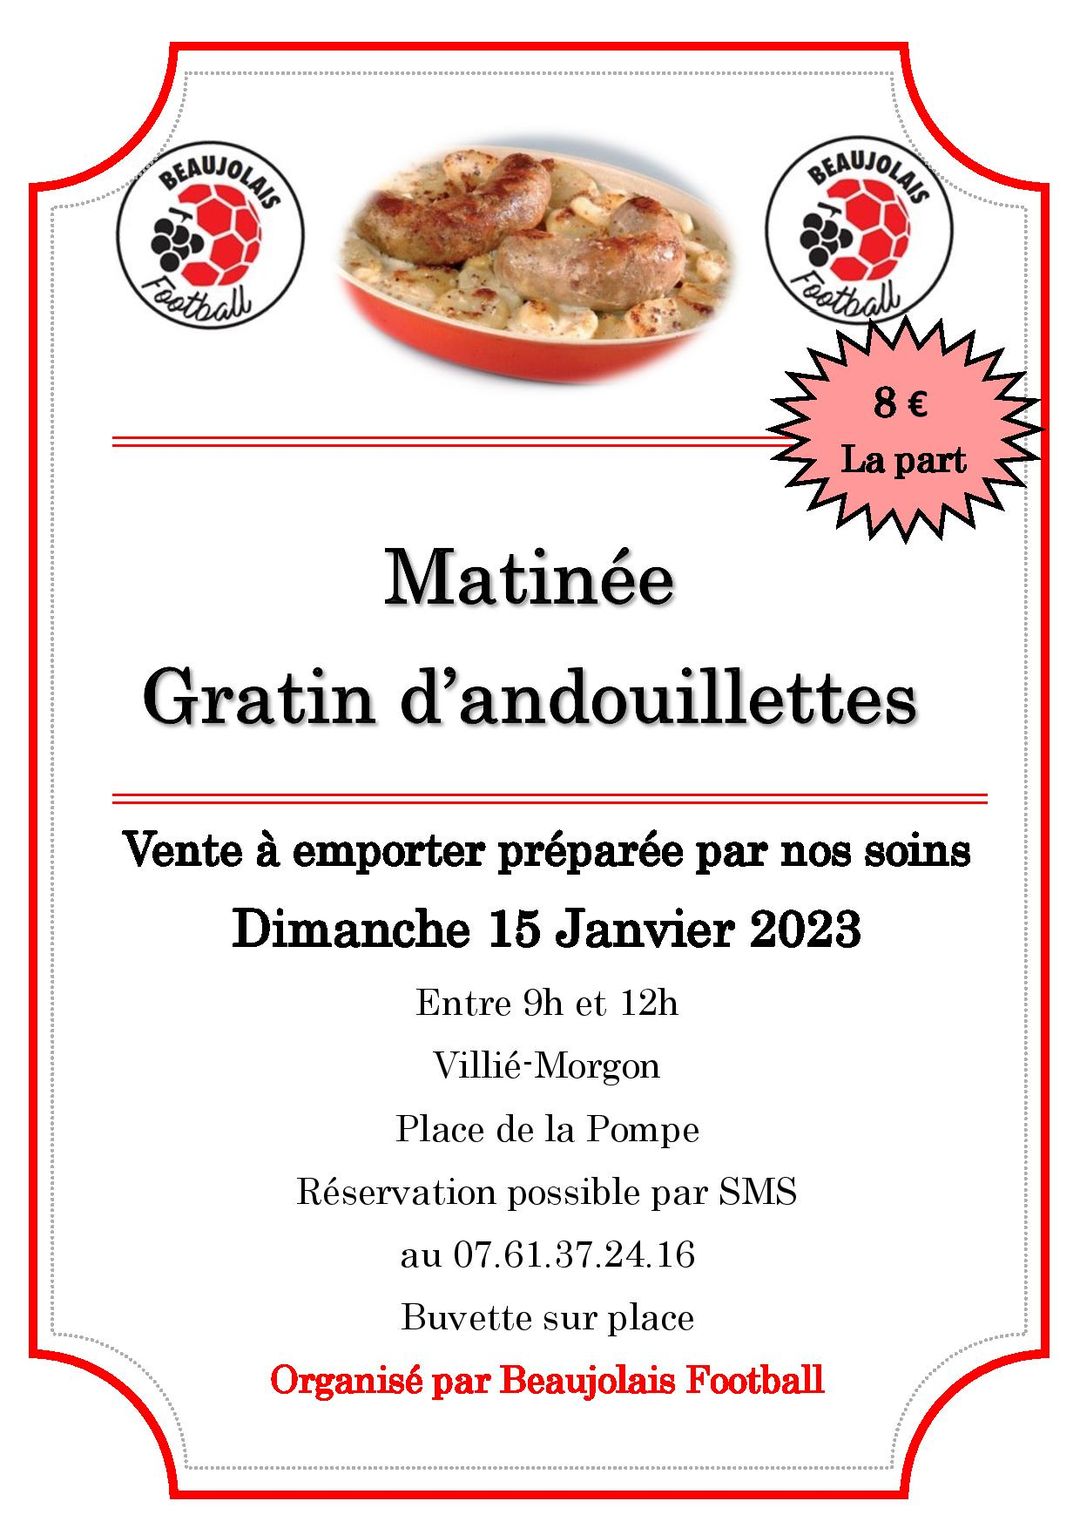 Matinée gratin d'andouillettes villie-morgon - Beaujolais foot